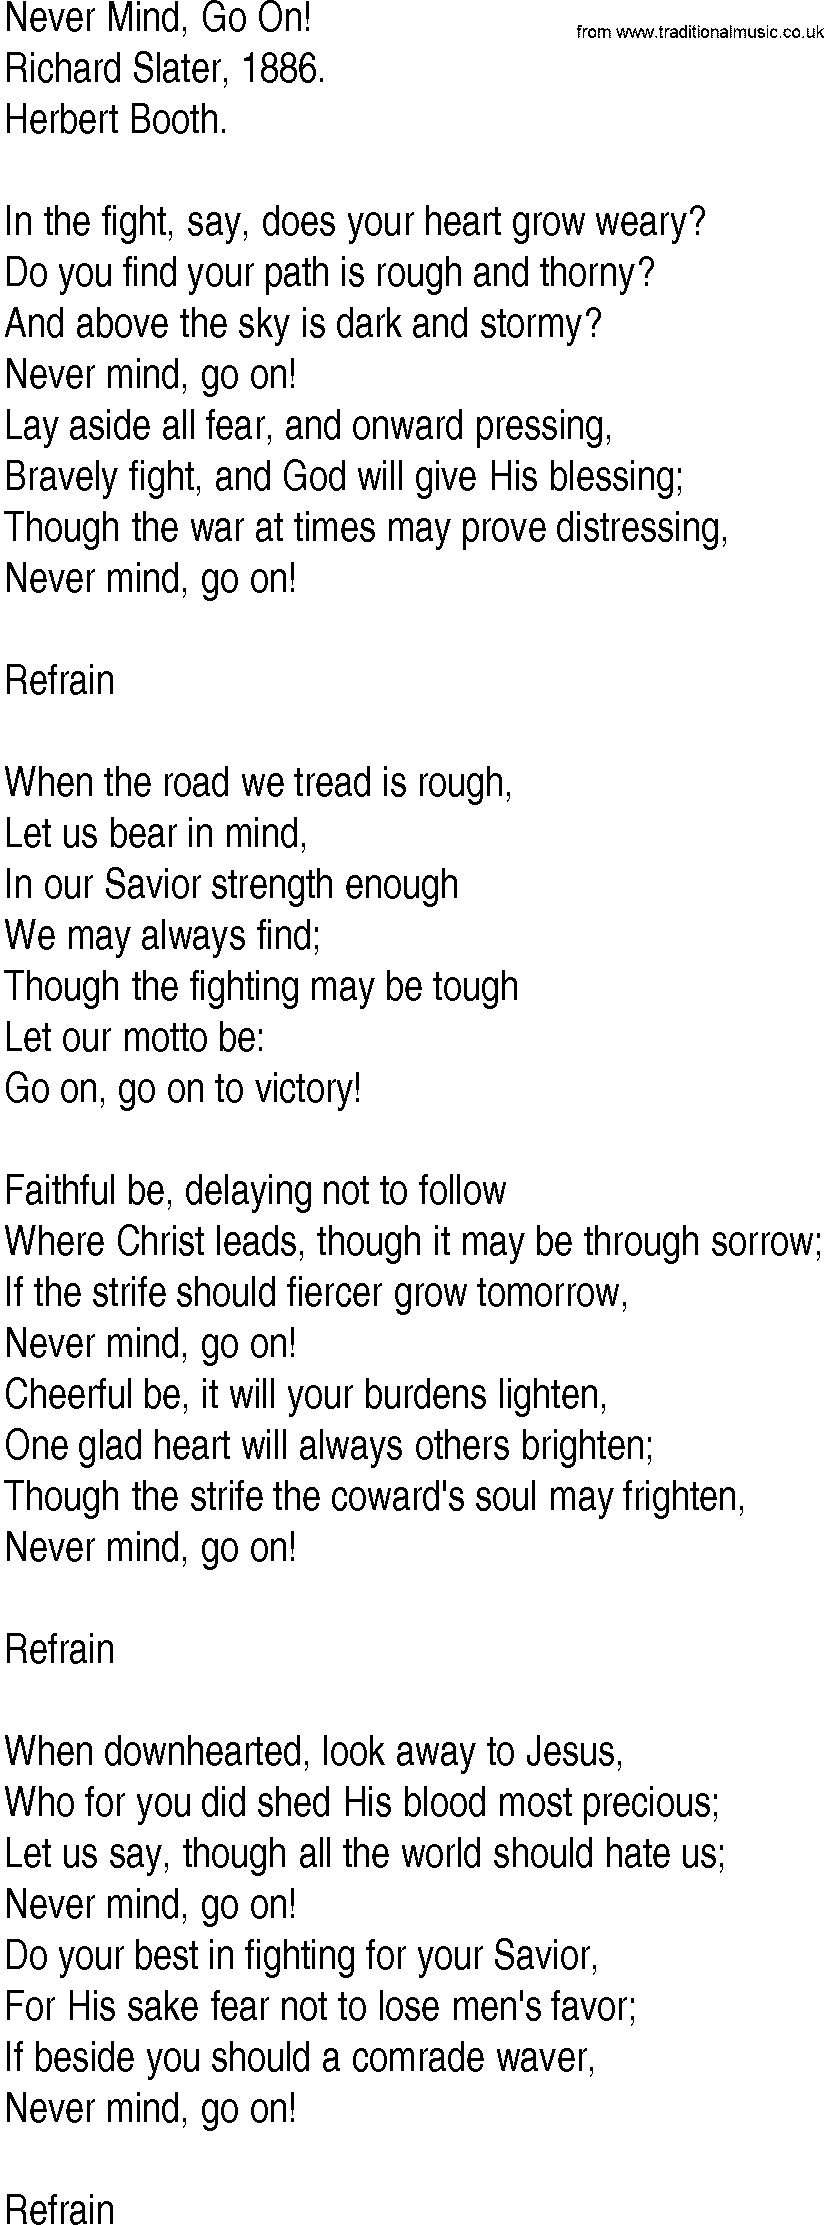 Hymn and Gospel Song: Never Mind, Go On! by Richard Slater lyrics